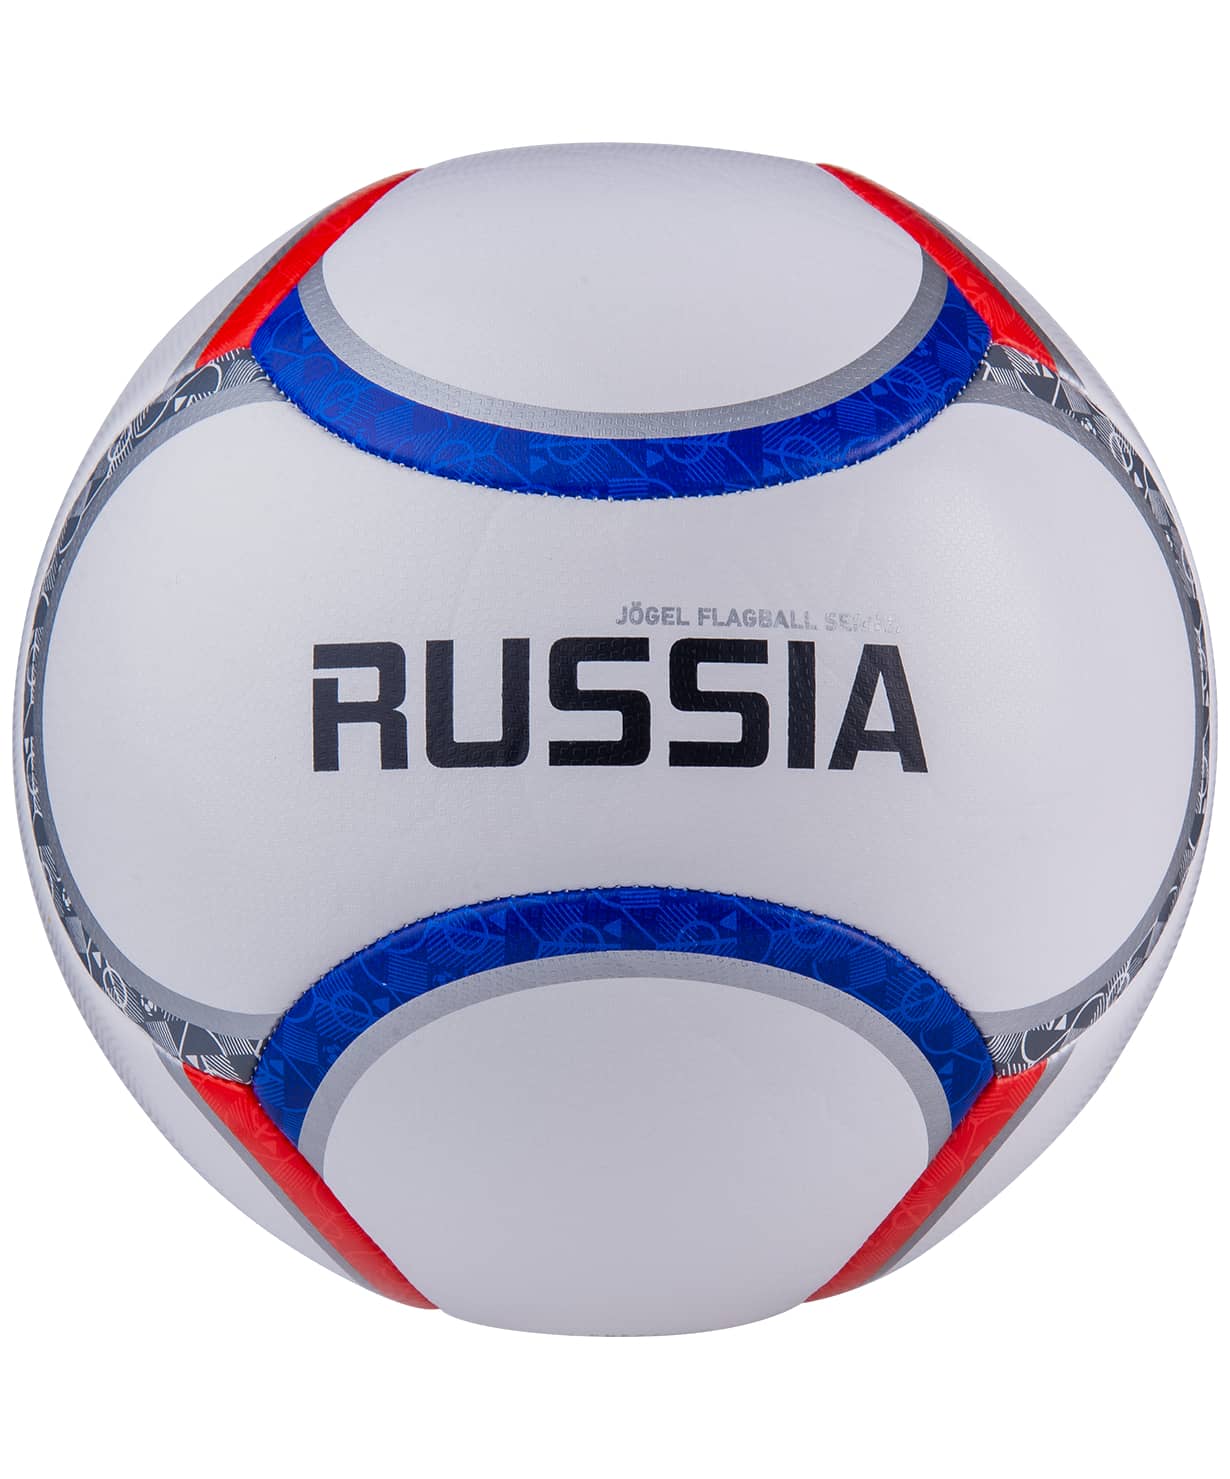   Jogel Flagball Russia  5